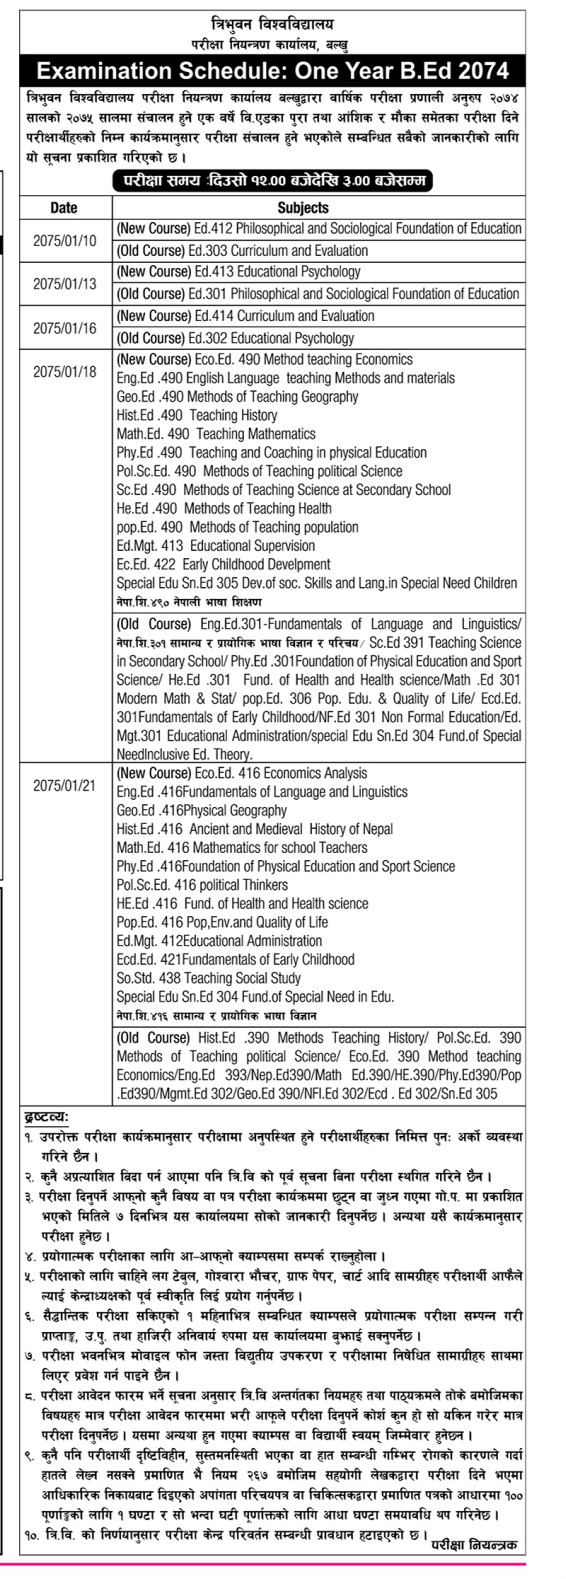 Tribhuvan University: Examination Schedule 